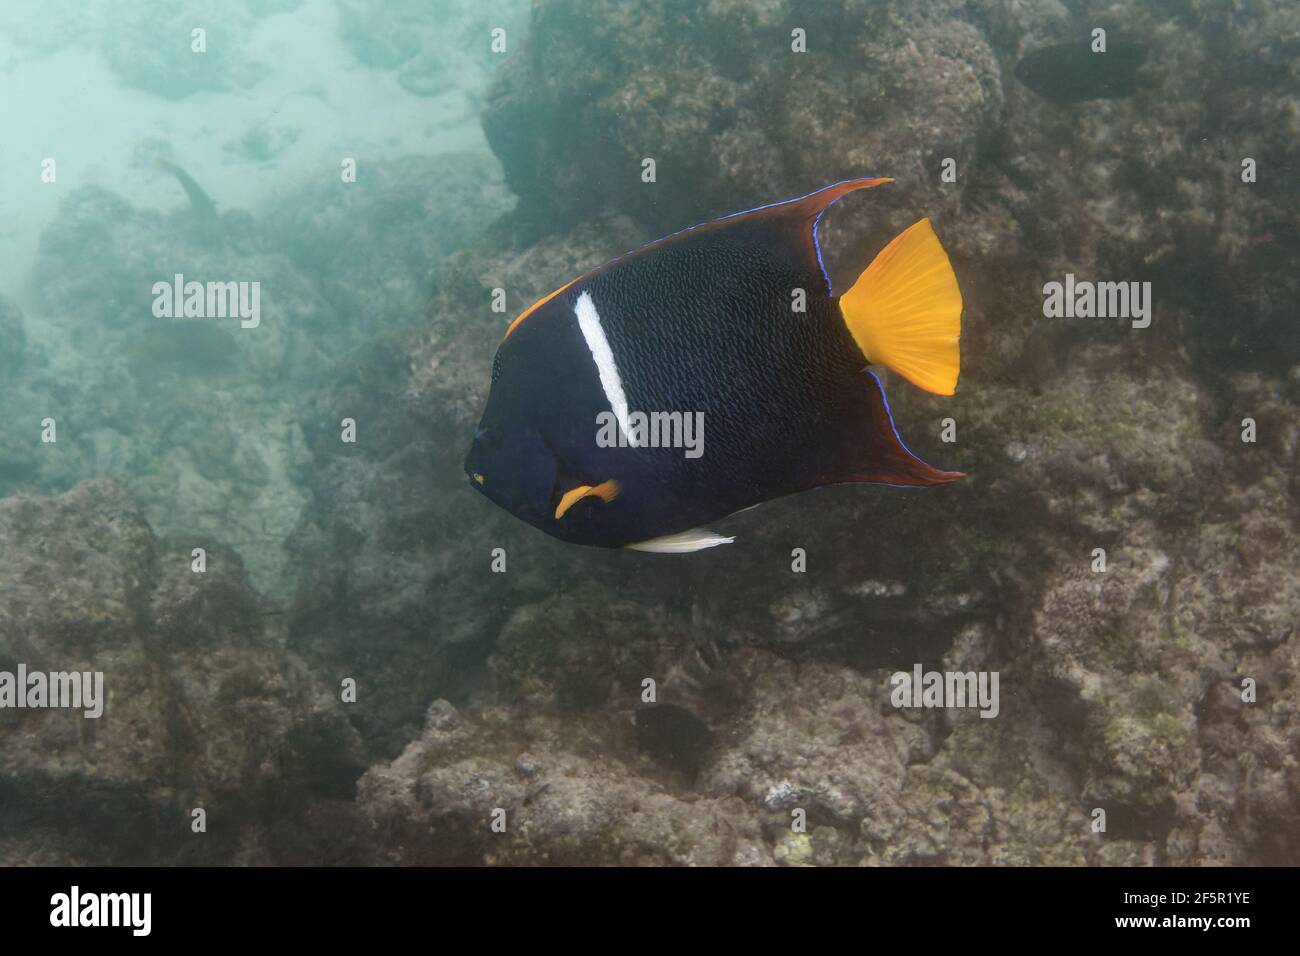 king angelfish or passer angelfish (Holacanthus passer) - Galapagos Islands, Ecuador Stock Photo